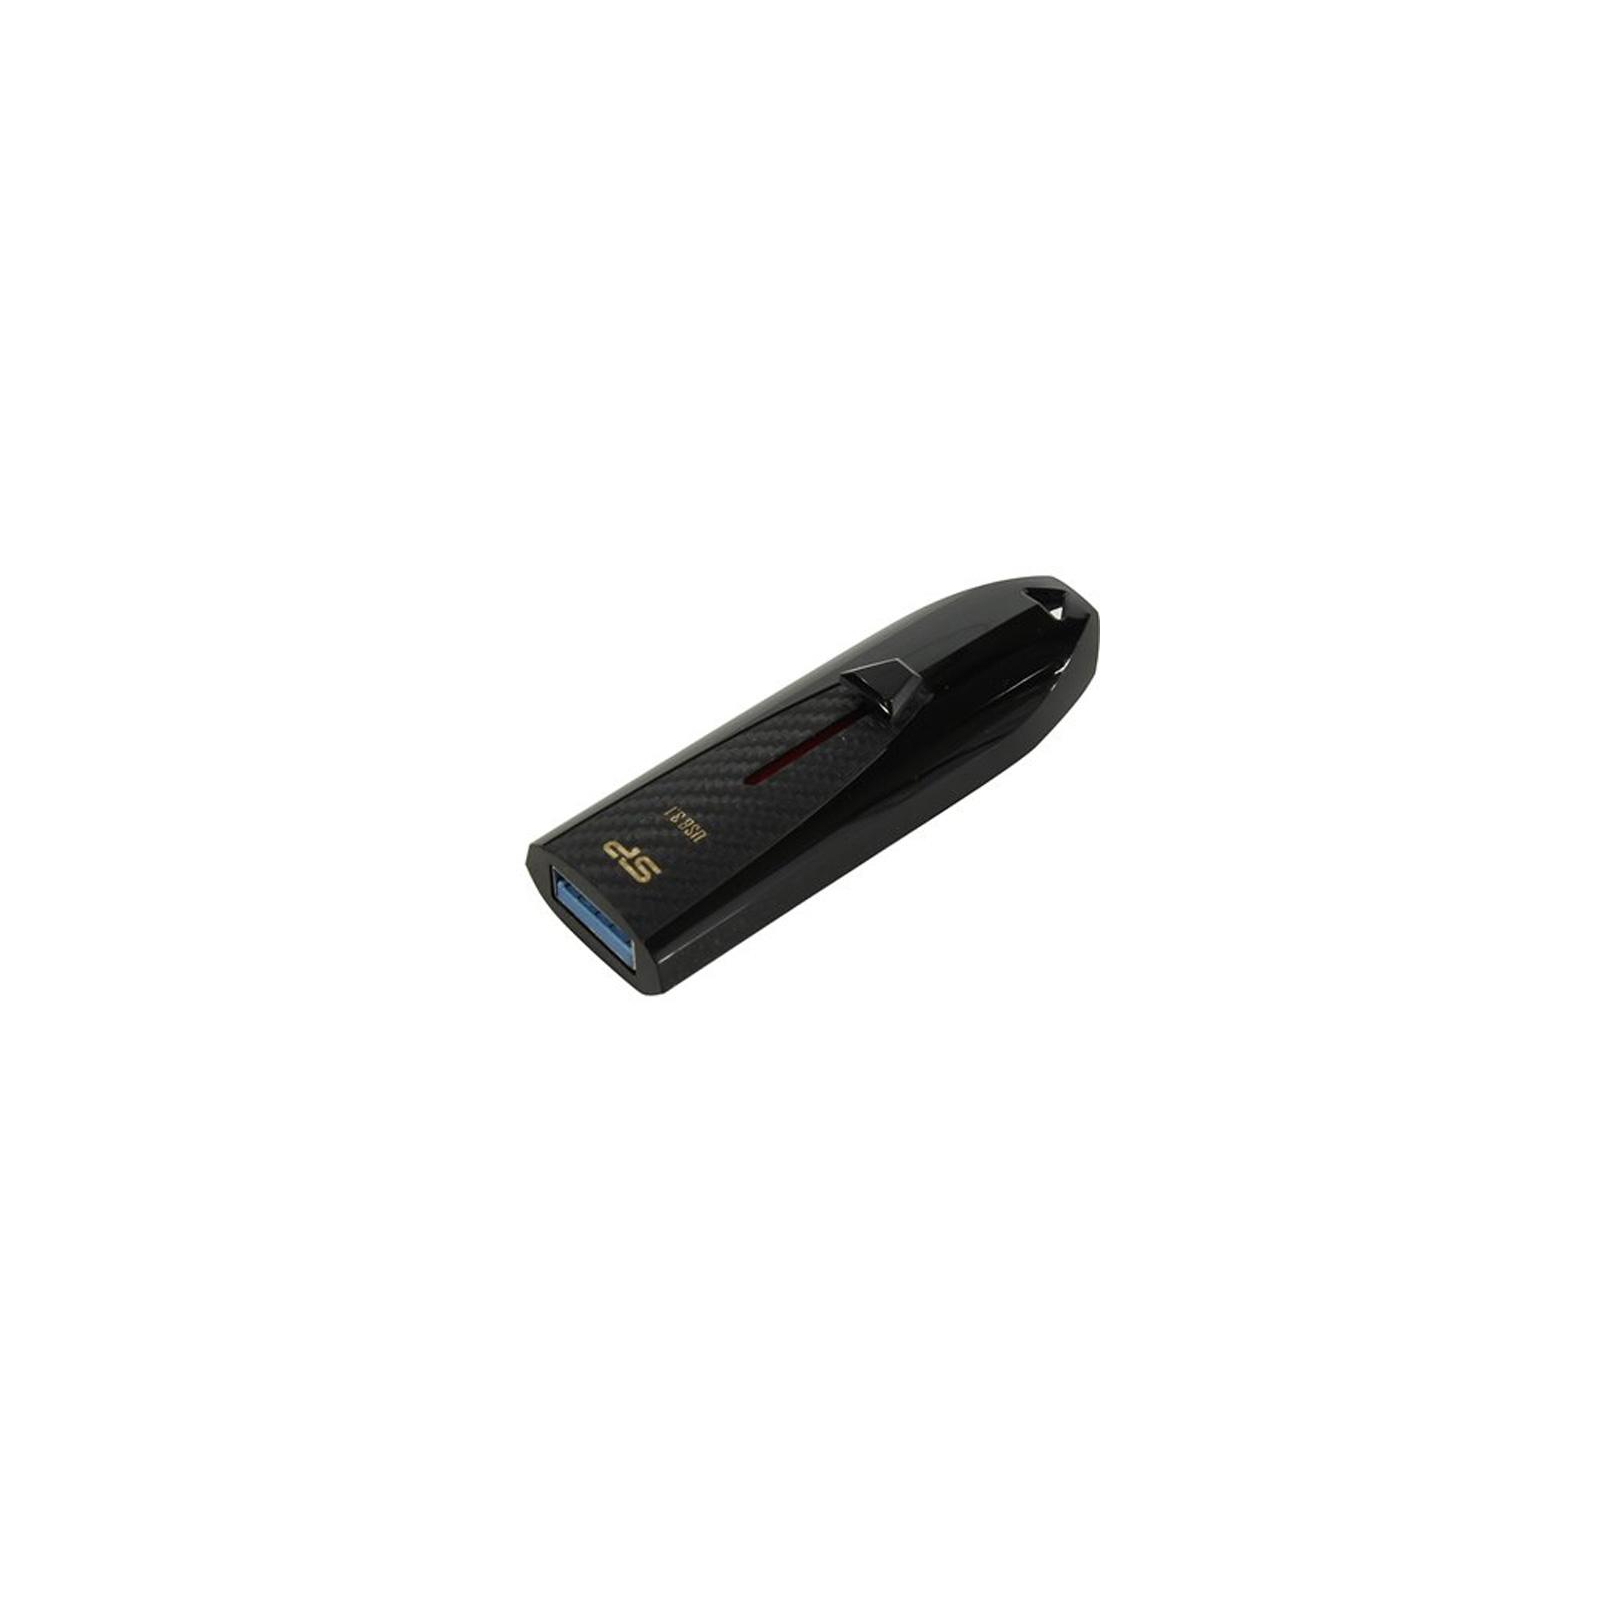 USB флеш накопитель Silicon Power 8GB B25 Black USB 3.0 (SP008GBUF3B25V1K) изображение 2